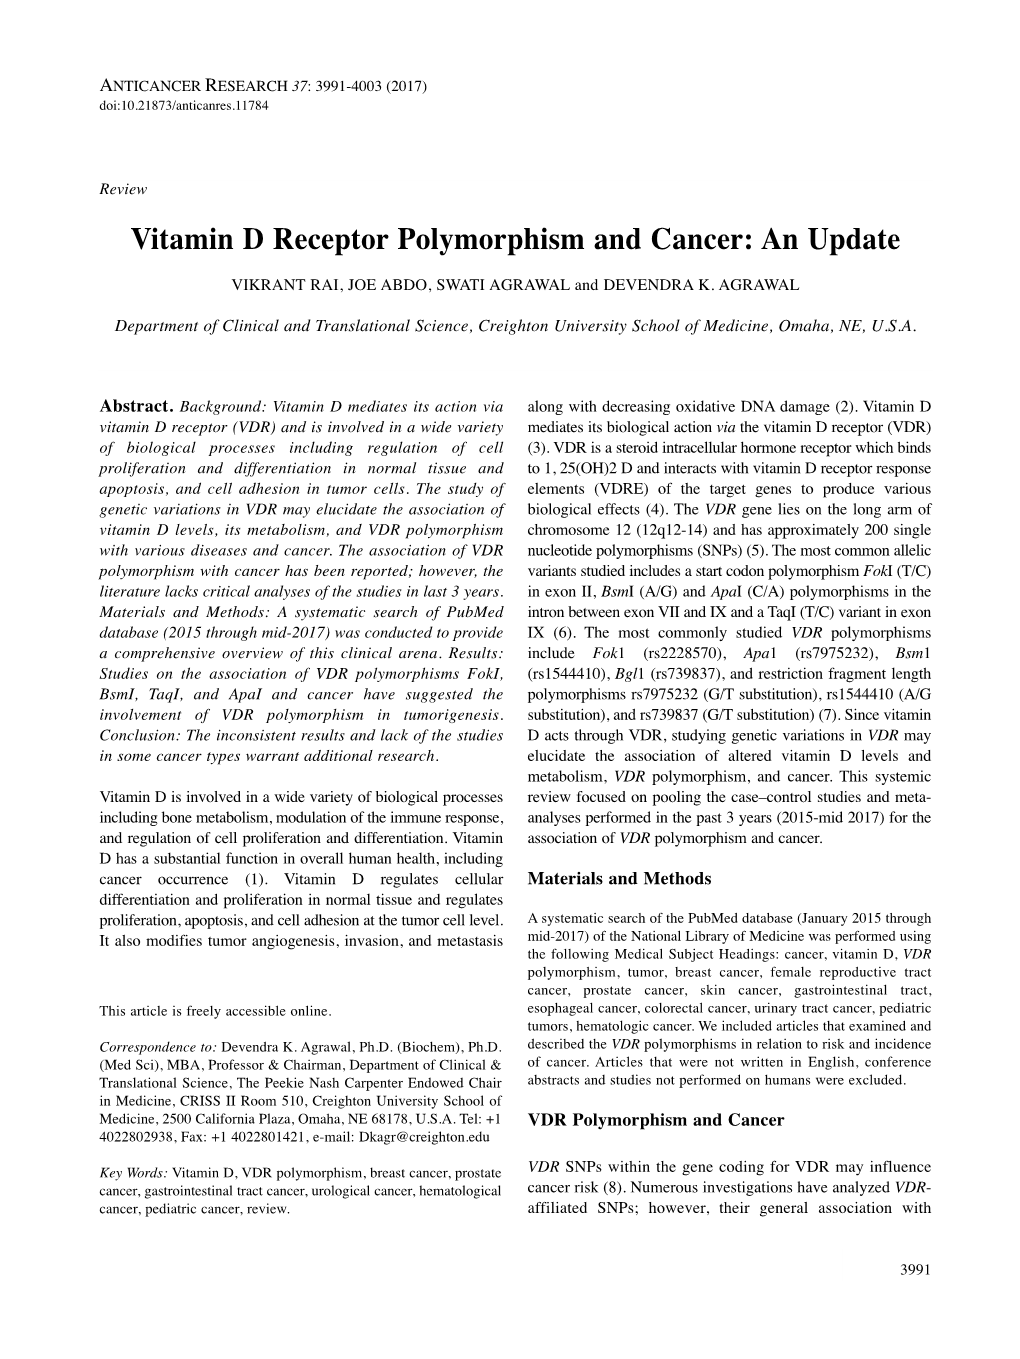 Vitamin D Receptor Polymorphism and Cancer: an Update VIKRANT RAI, JOE ABDO, SWATI AGRAWAL and DEVENDRA K